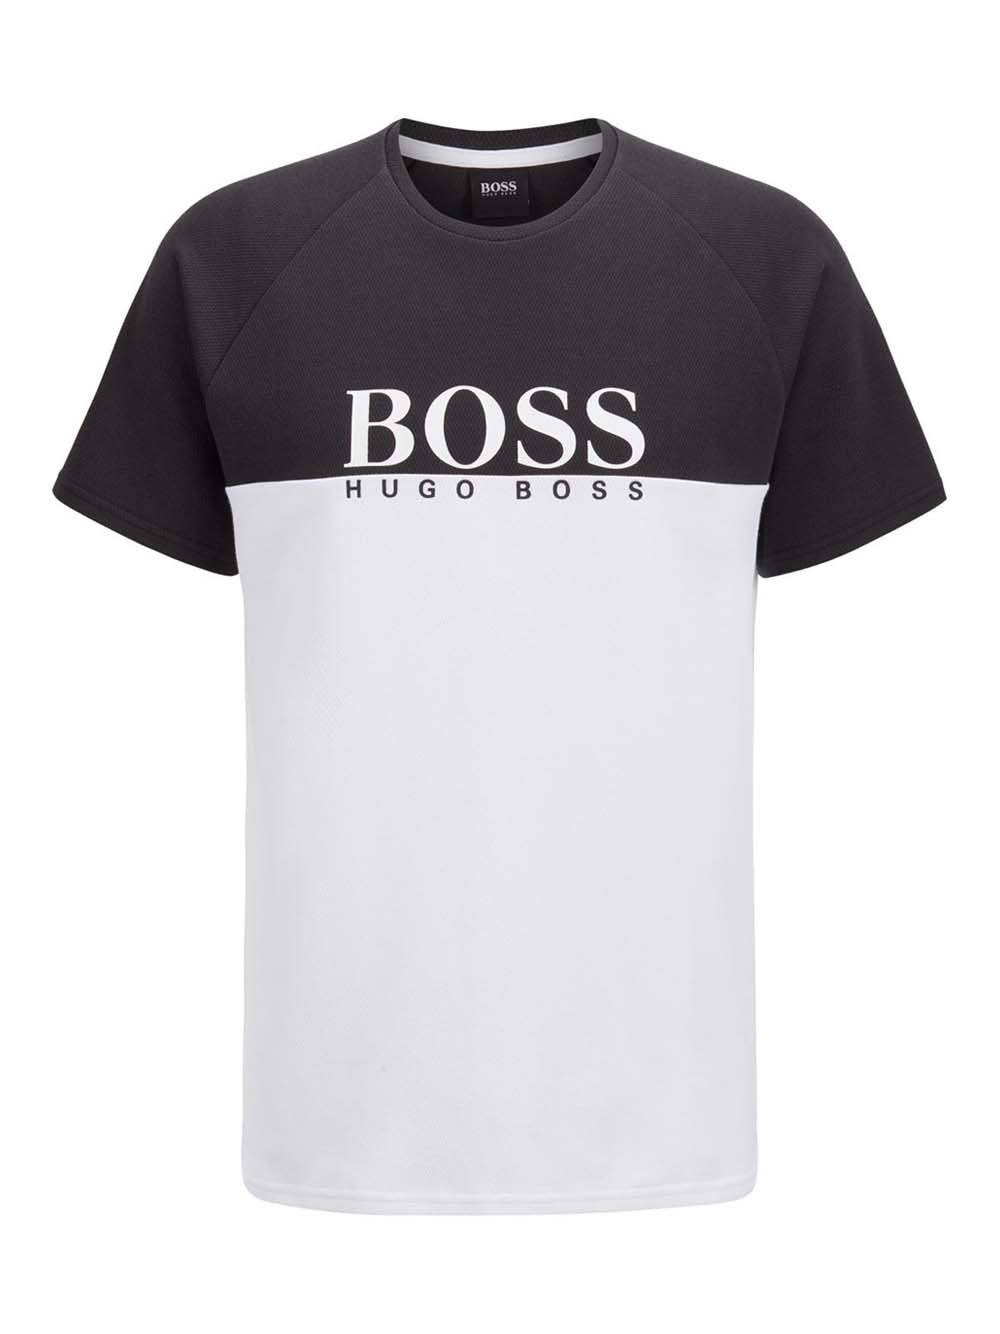 BOSS Loungewear Logo T-Shirt Black/White - MAISONDEFASHION.COM